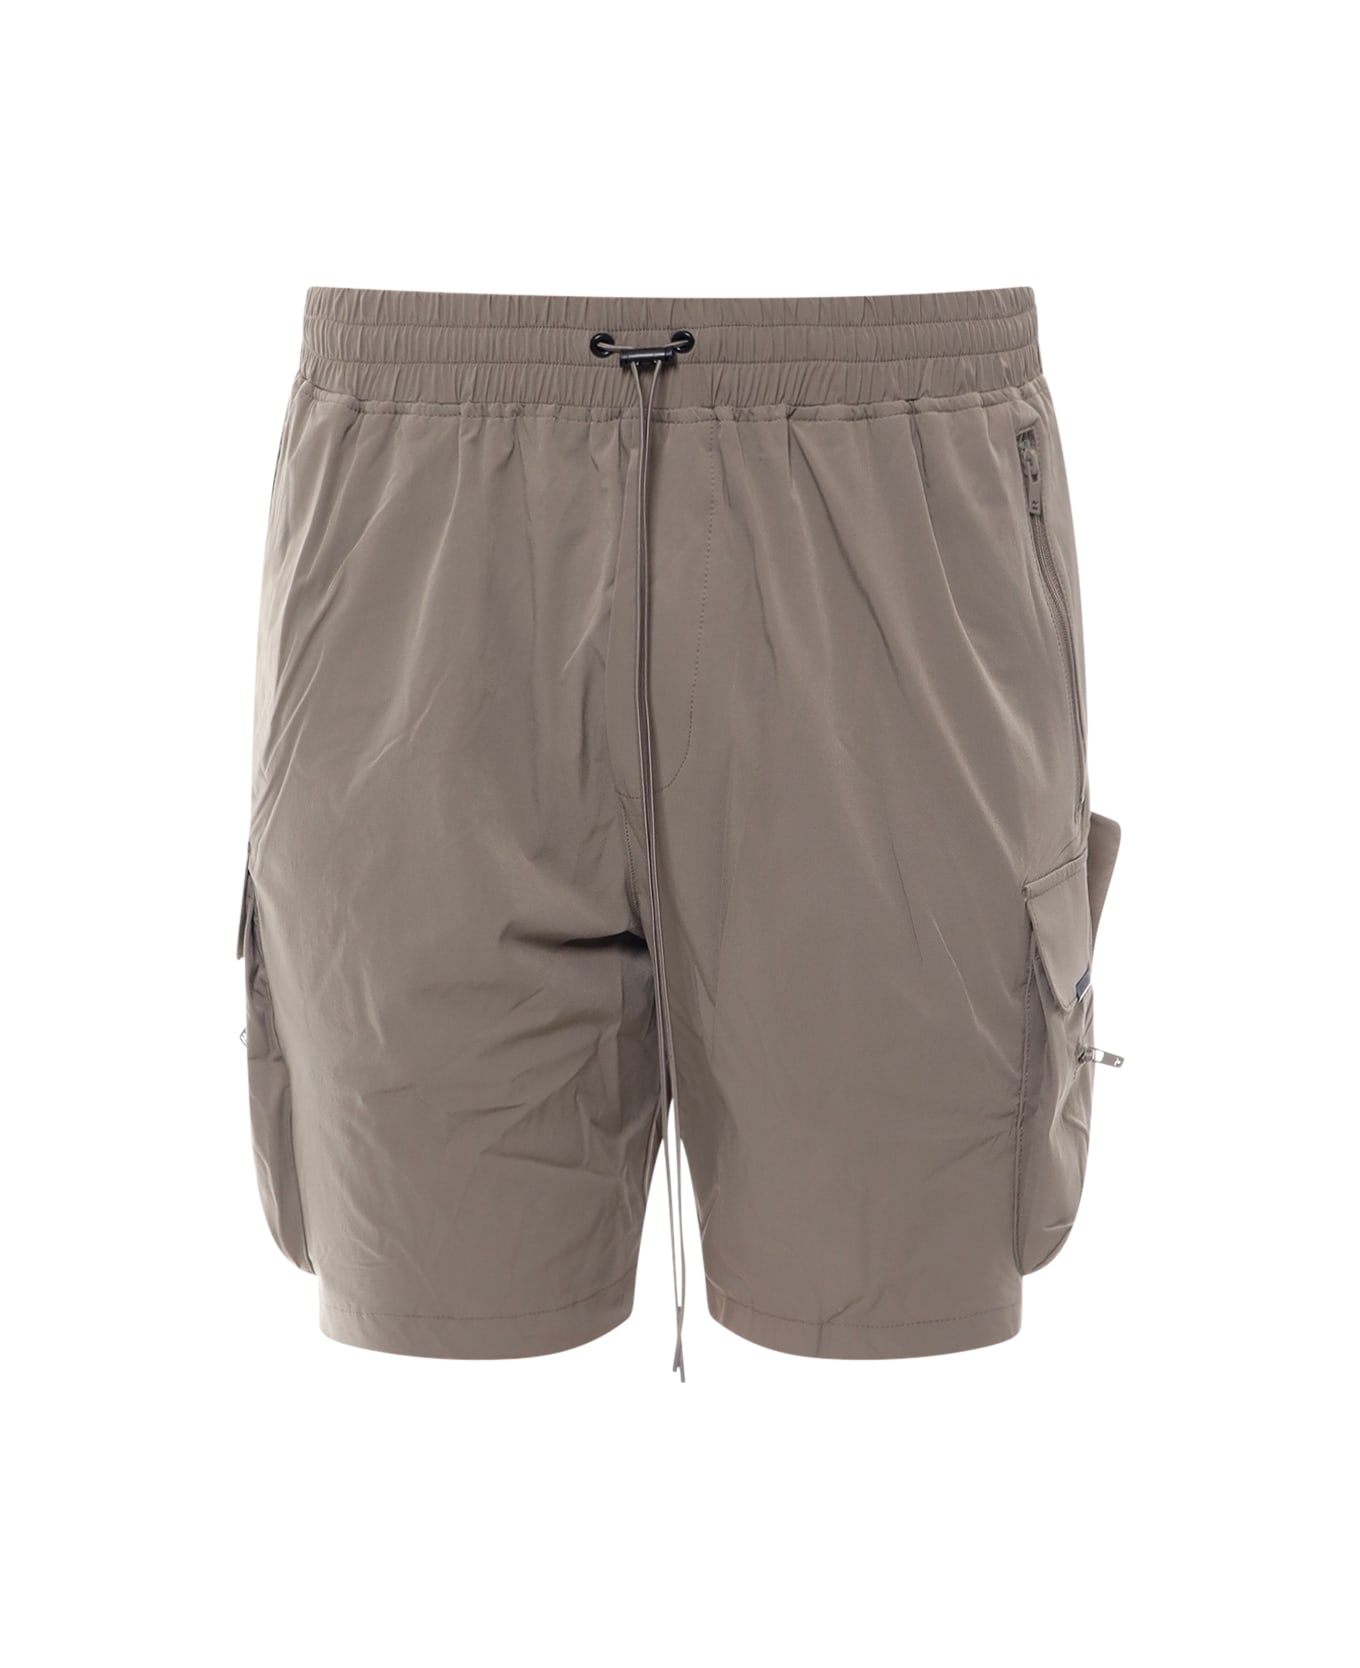 REPRESENT Bermuda Shorts - Beige